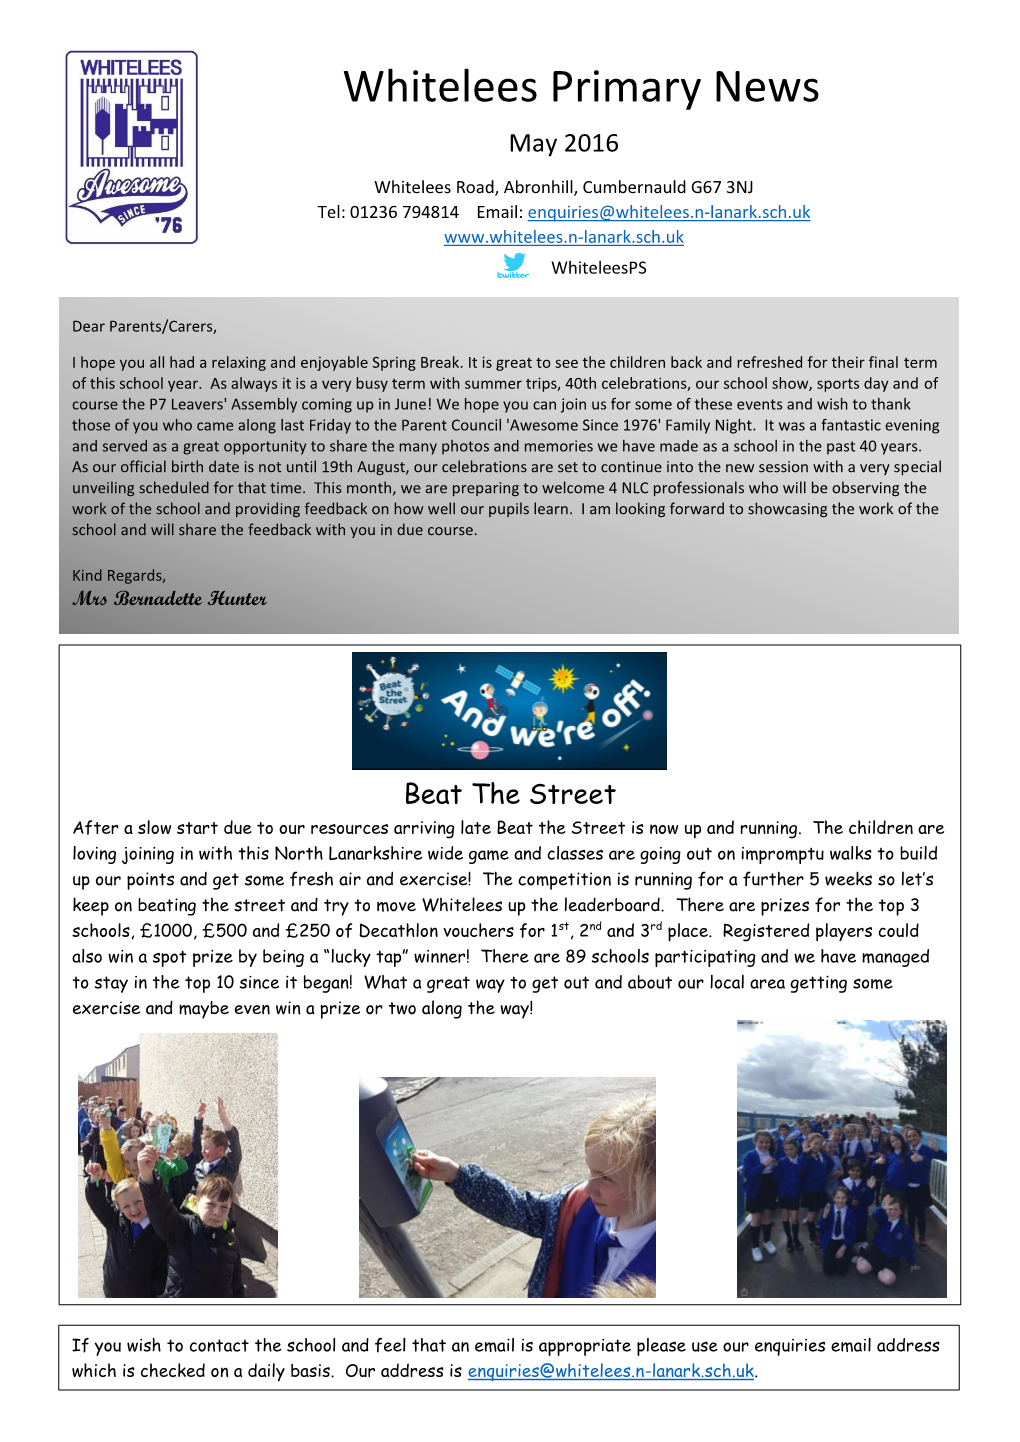 Whitelees Primary News May 2016